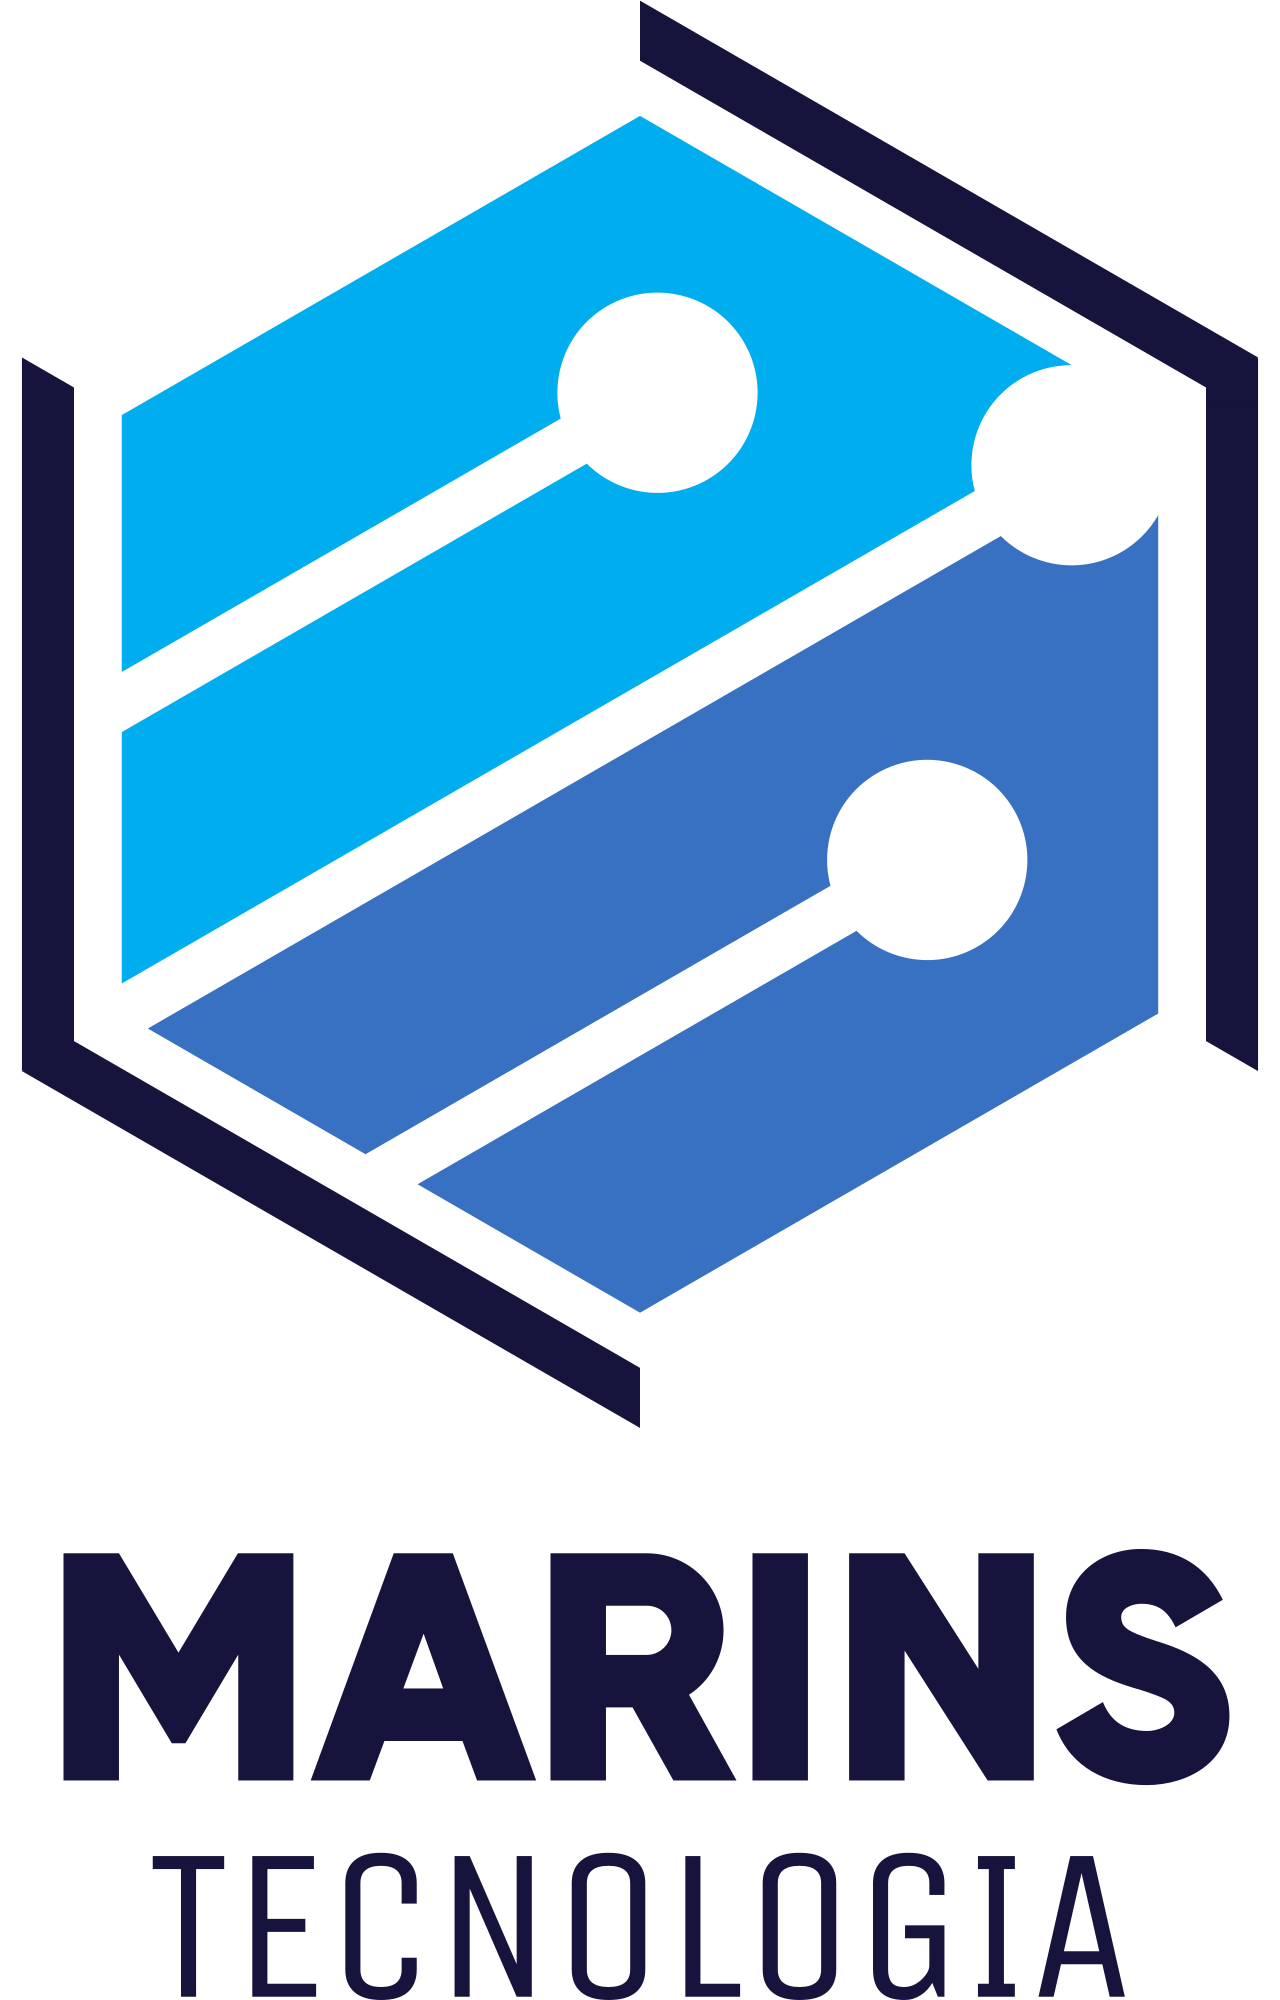 MARINS's logo